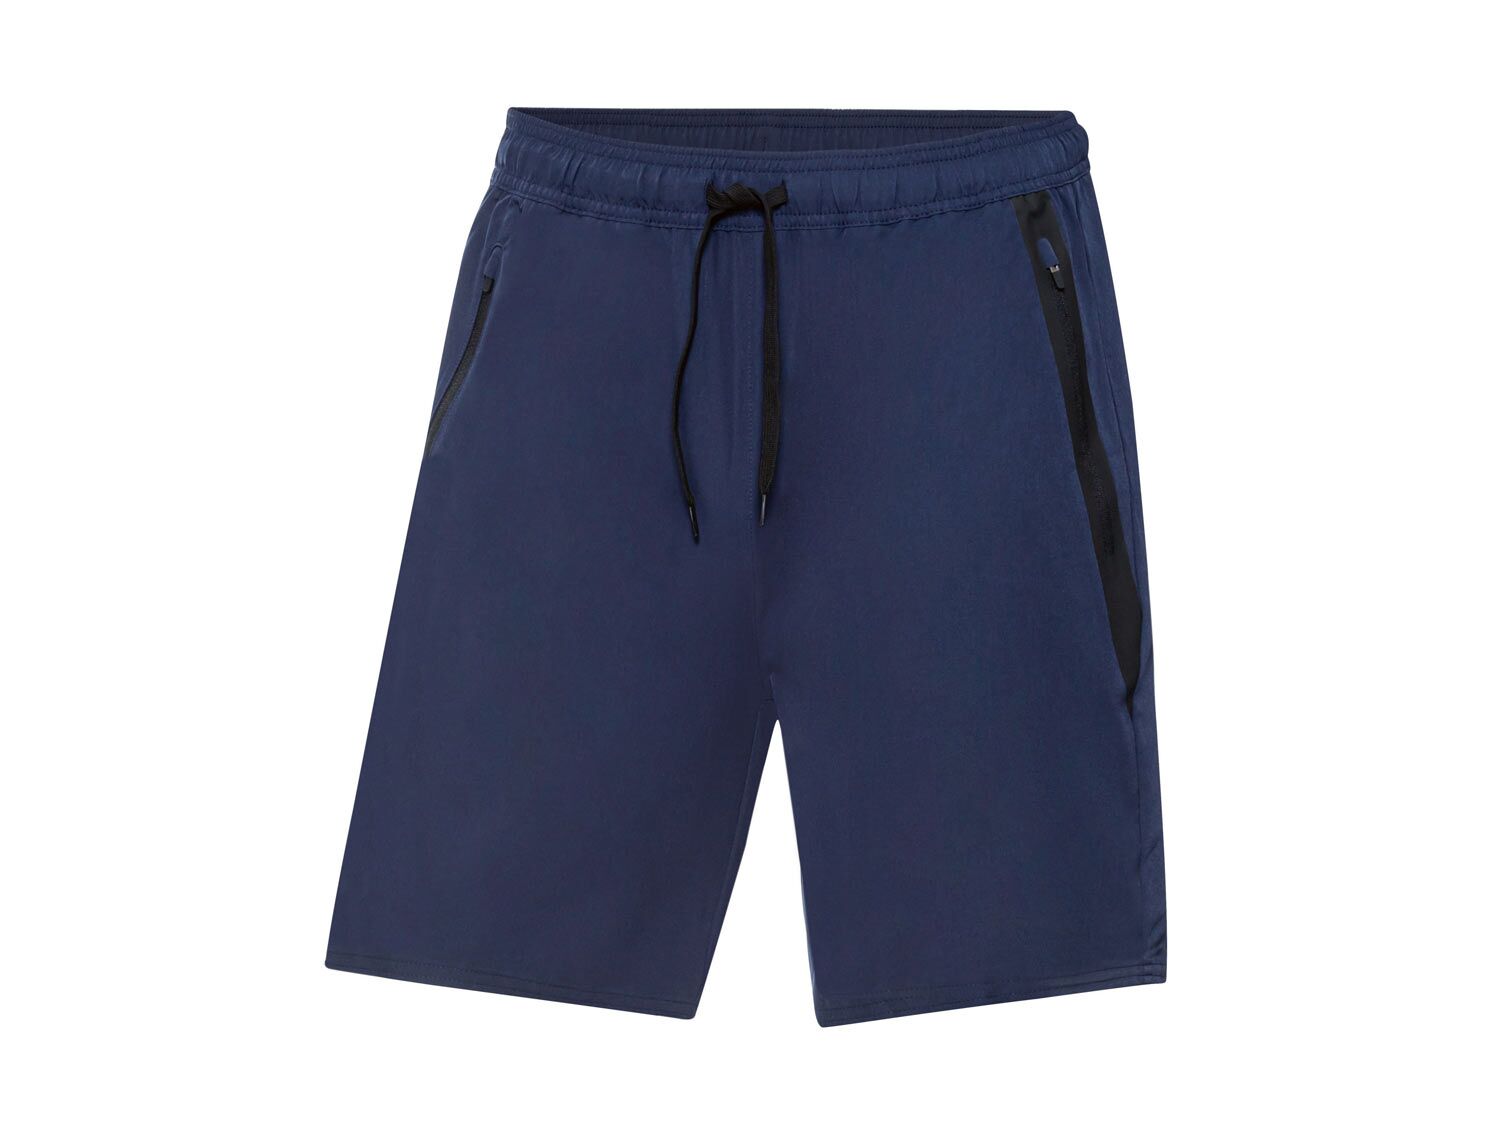 Pantalón corto técnico para hombre con cintura elástica y cordón azul